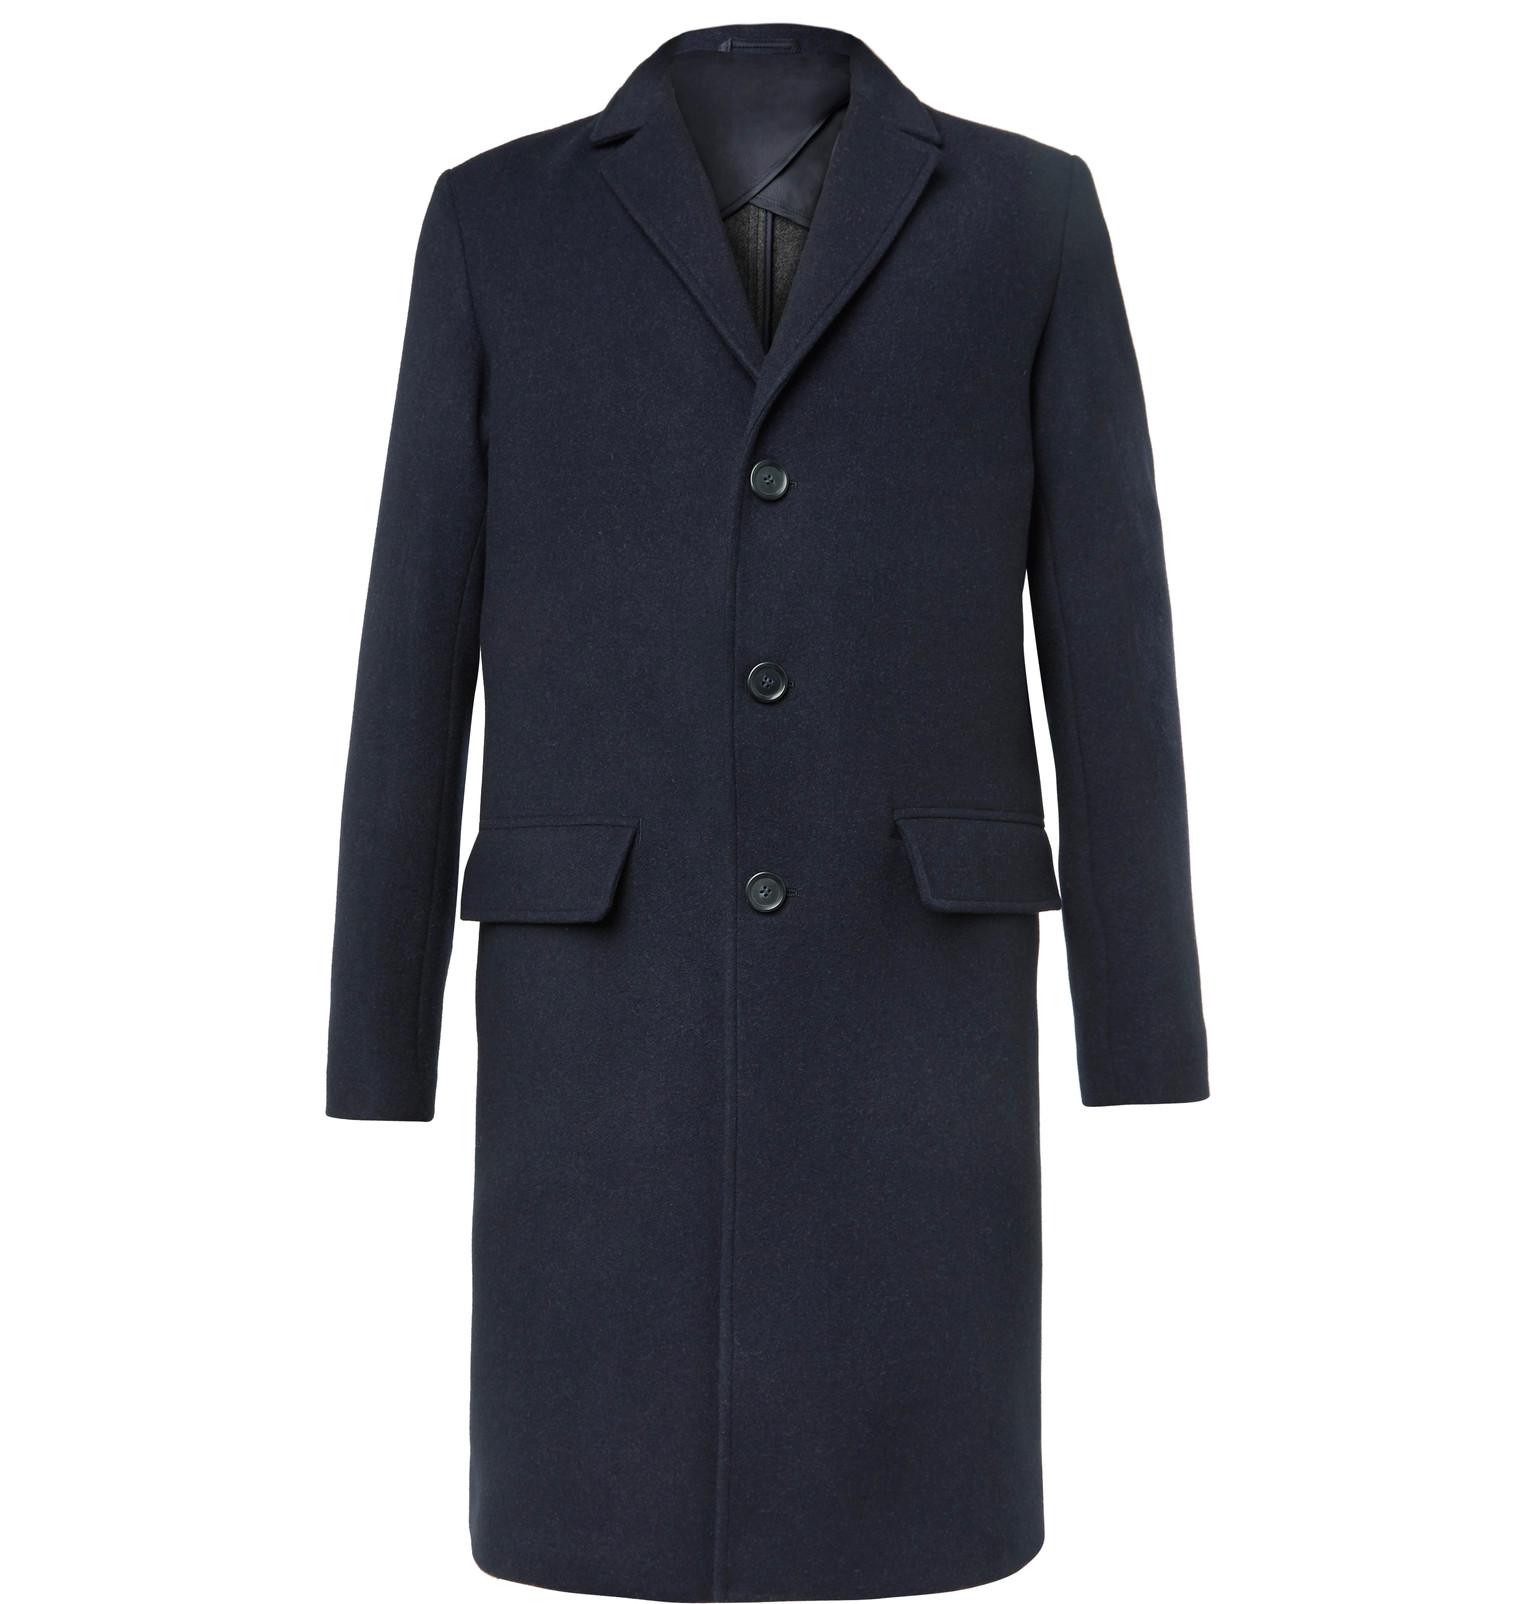 MR P. Double-faced Virgin-wool Overcoat in Navy (Blue) for Men - Lyst